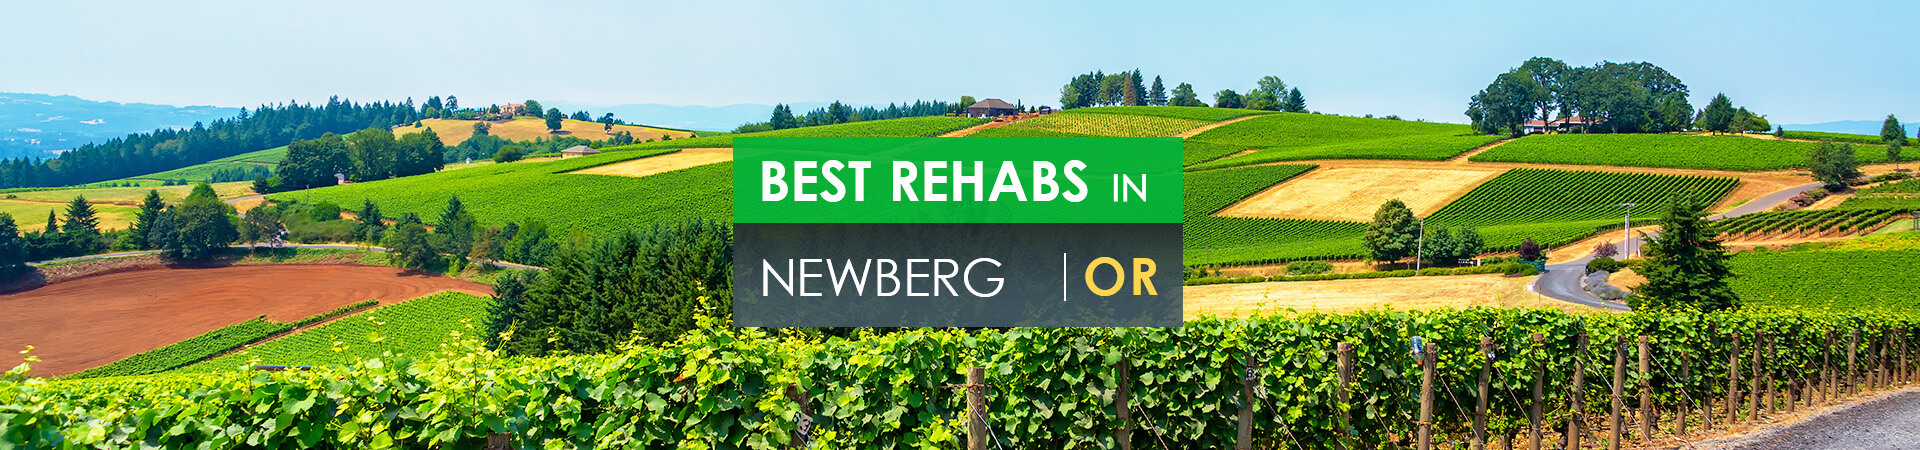 Best rehabs in Newberg, OR